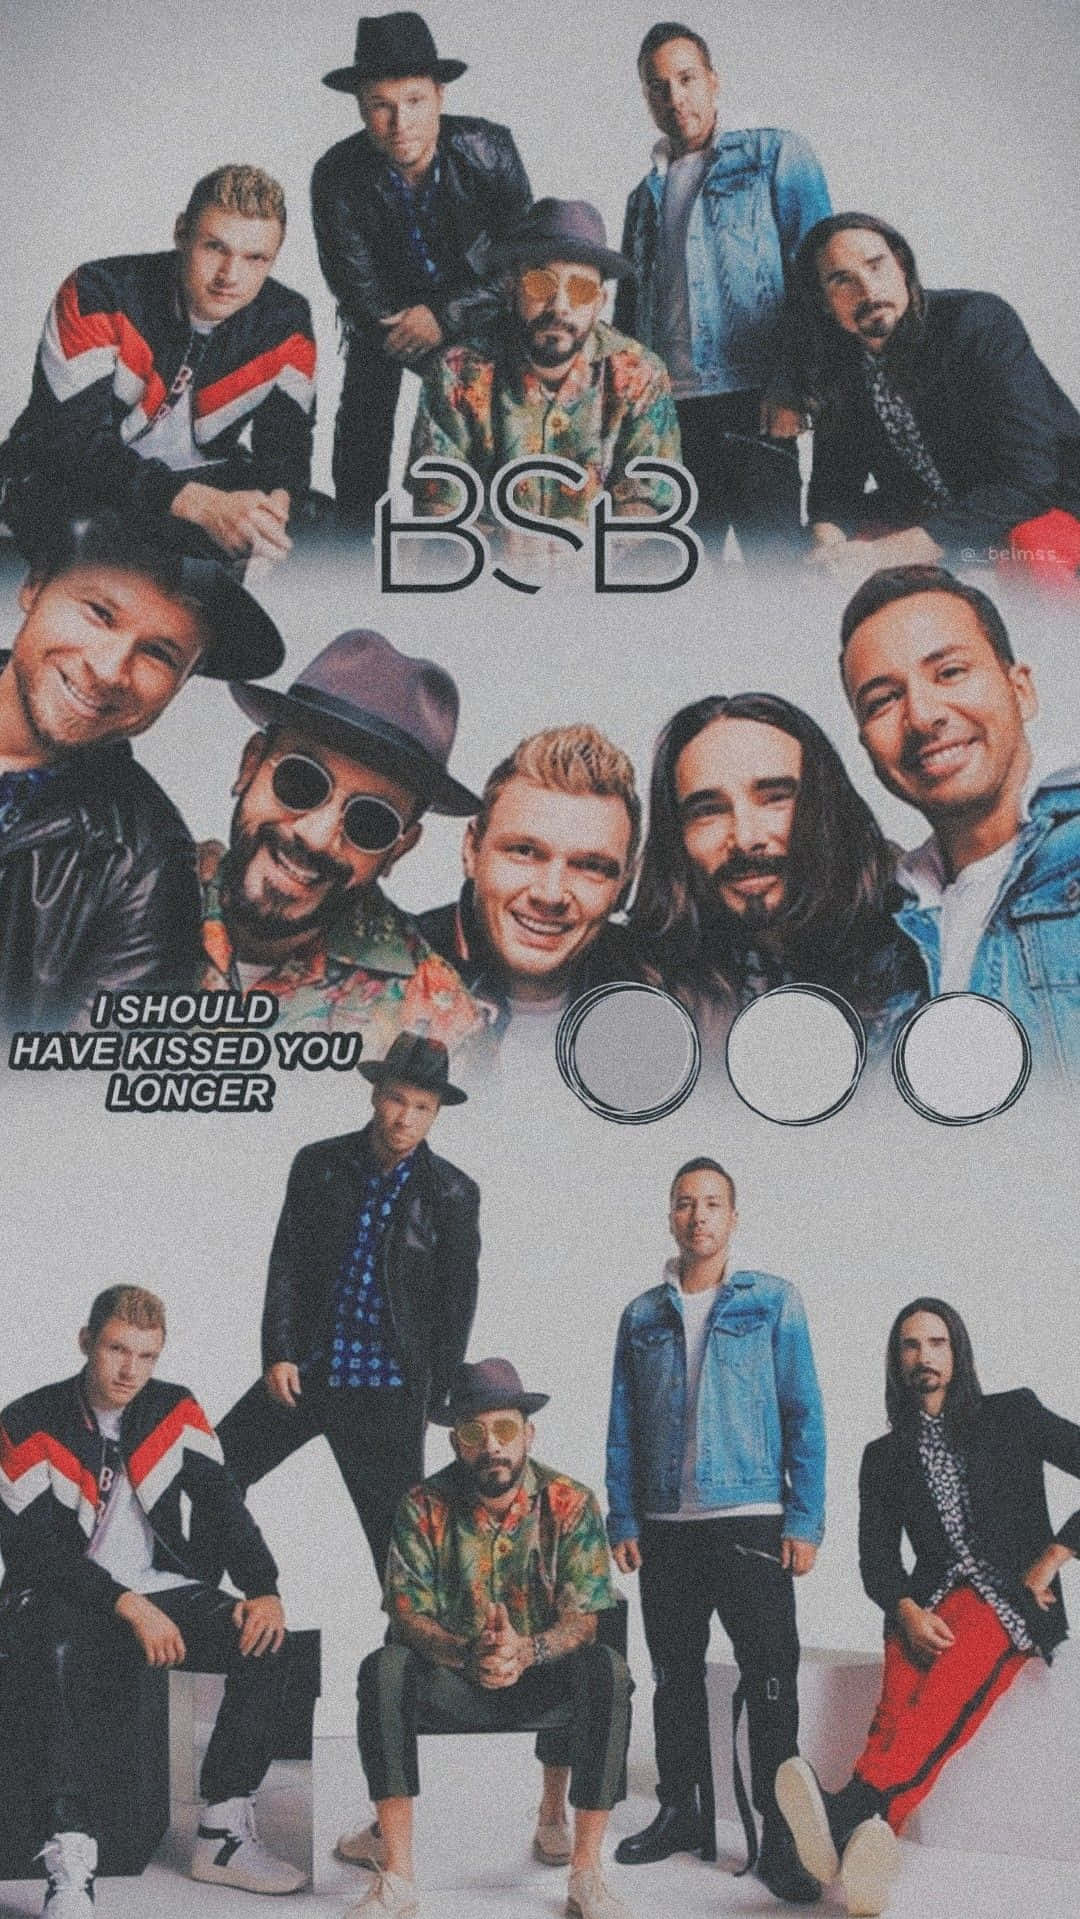 Backstreet Boys – Music royalty since 1993